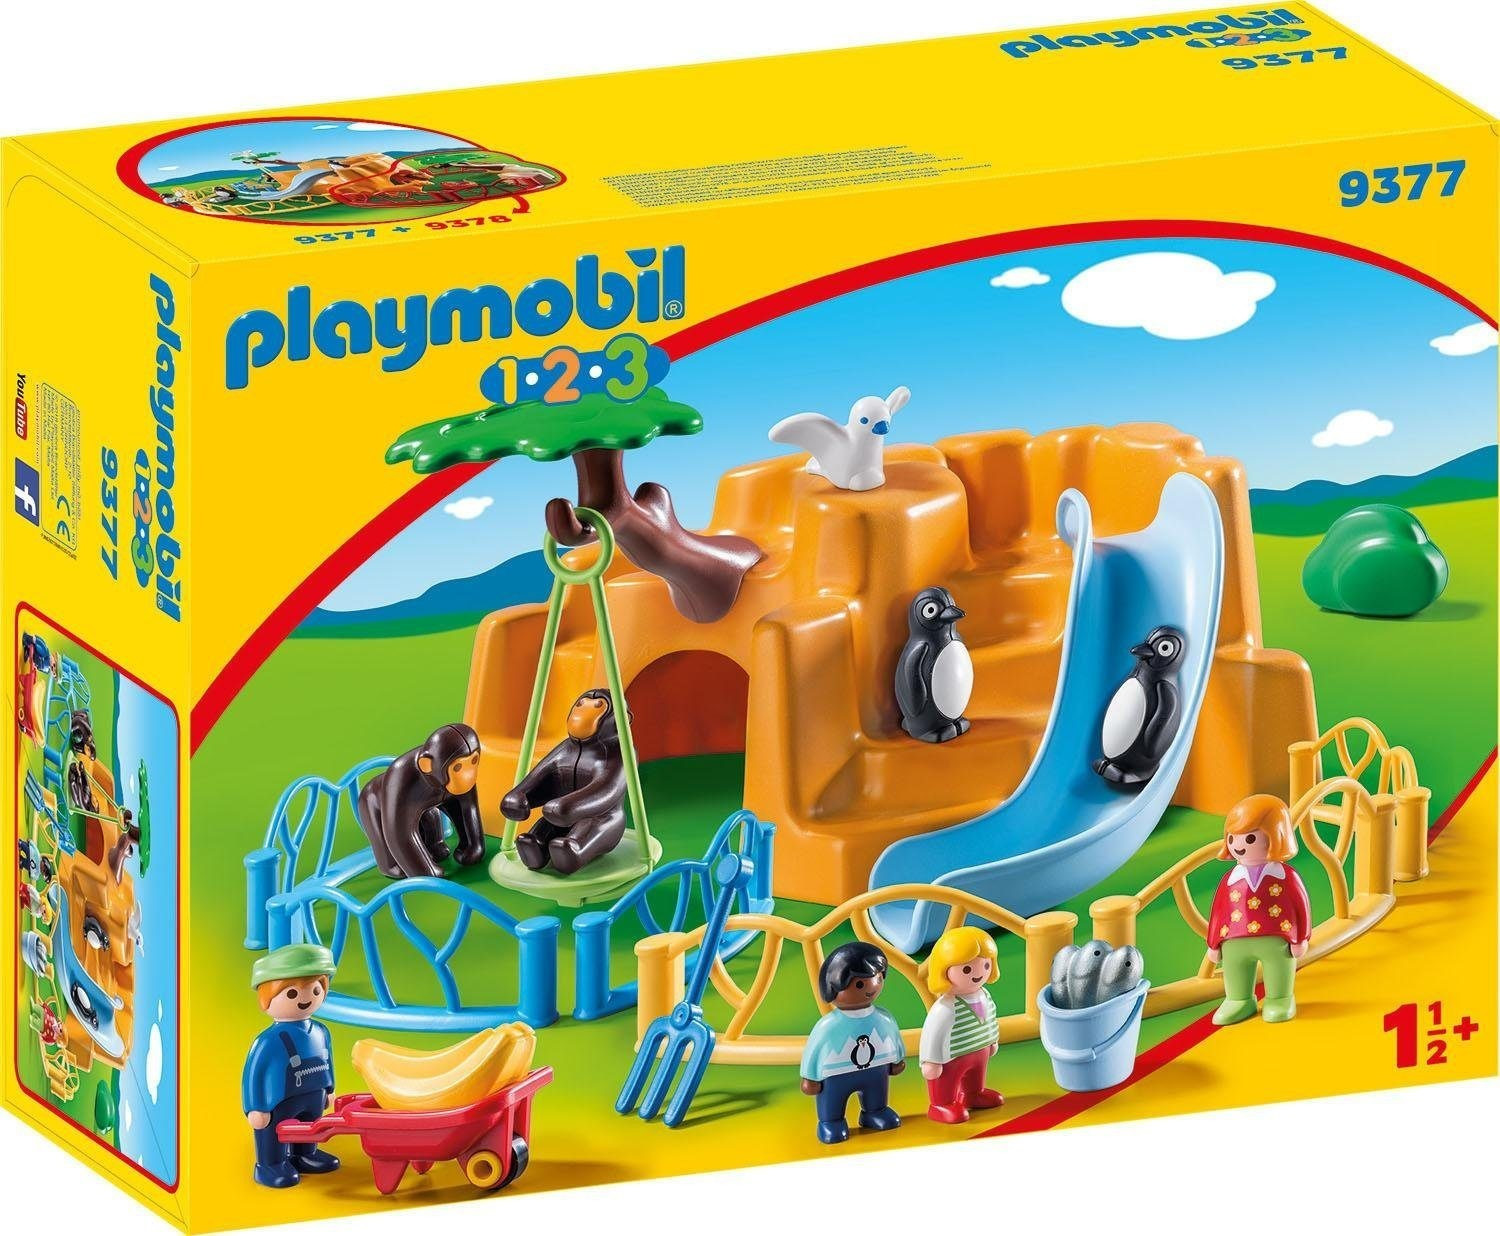 Playmobil 1.2.3 - Zoo (9377)